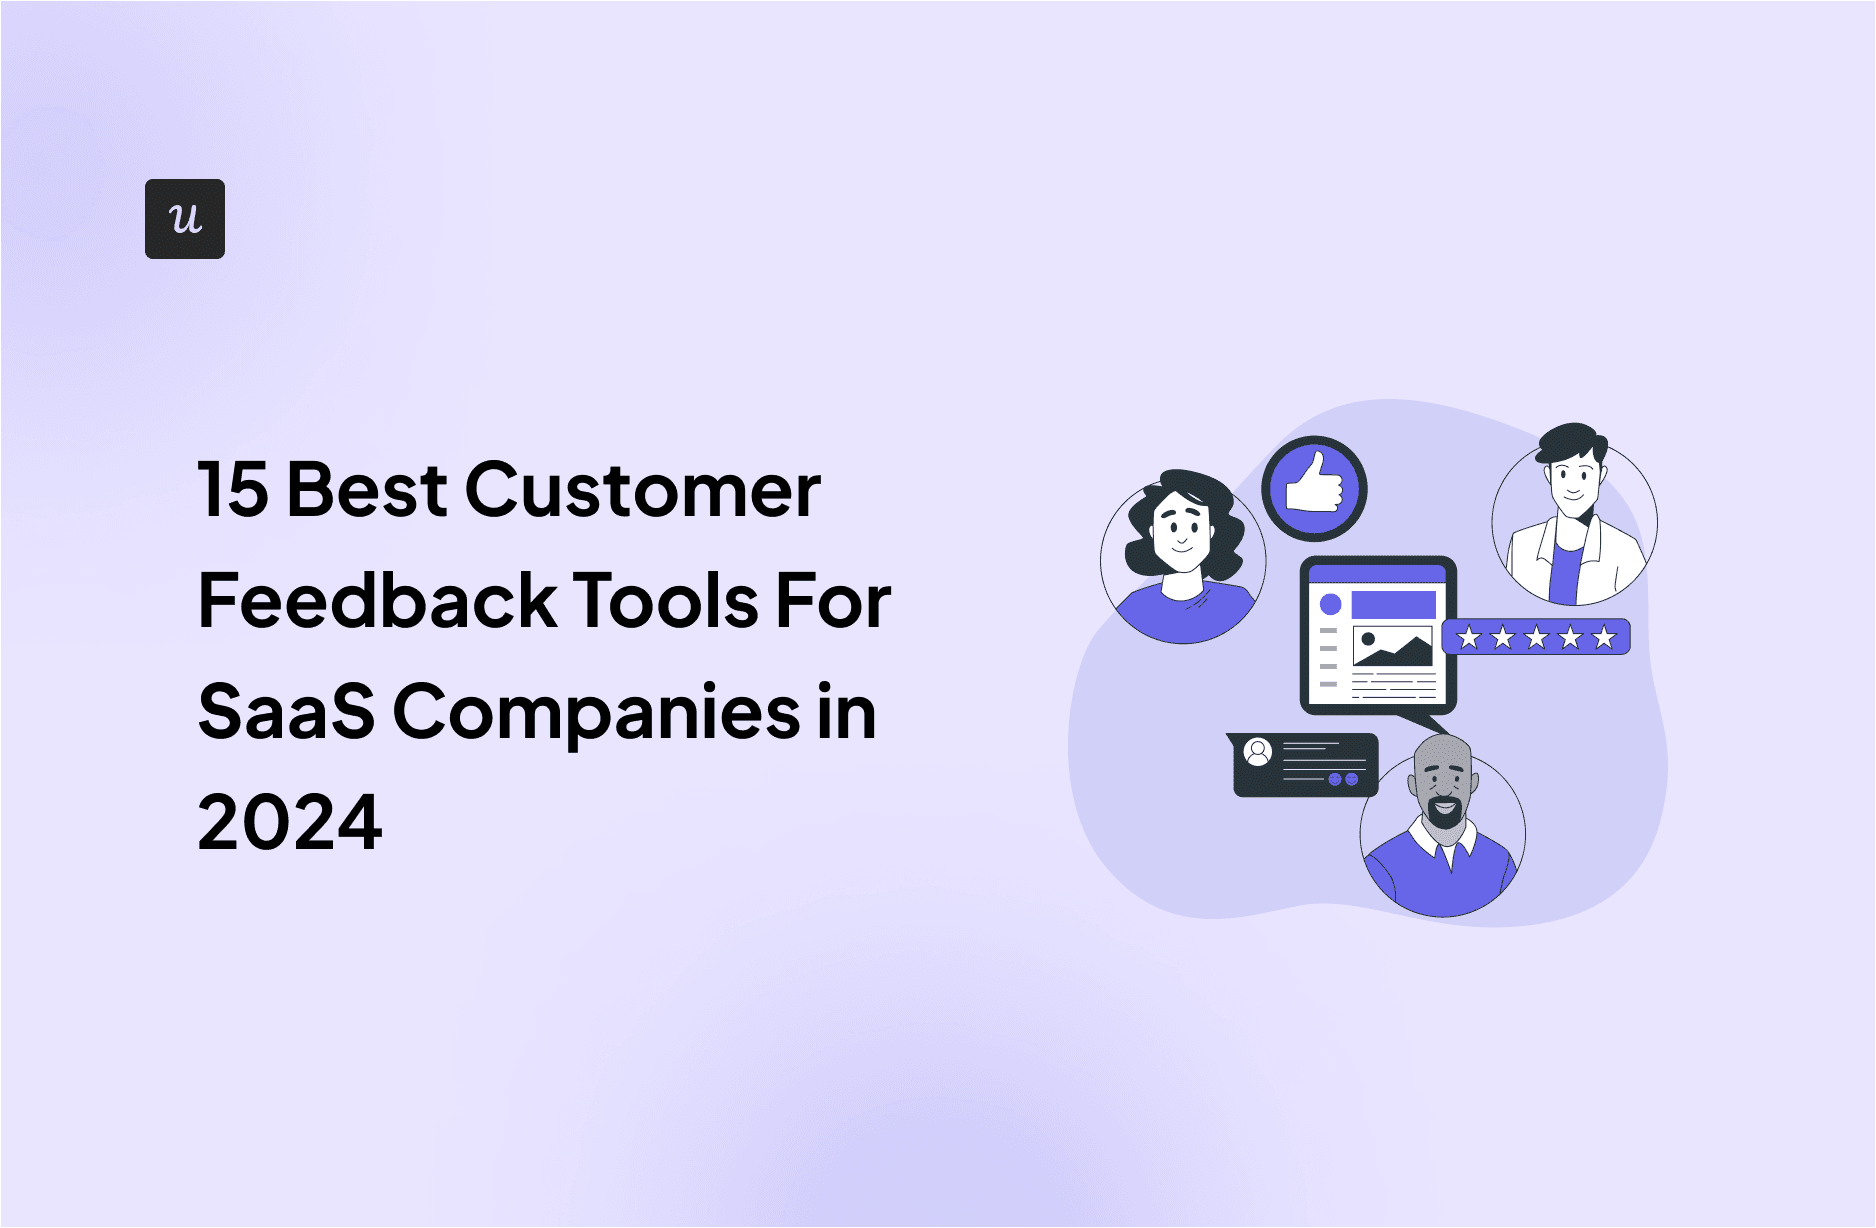 15 Best Customer Feedback Tools For SaaS Companies in 2024 cover